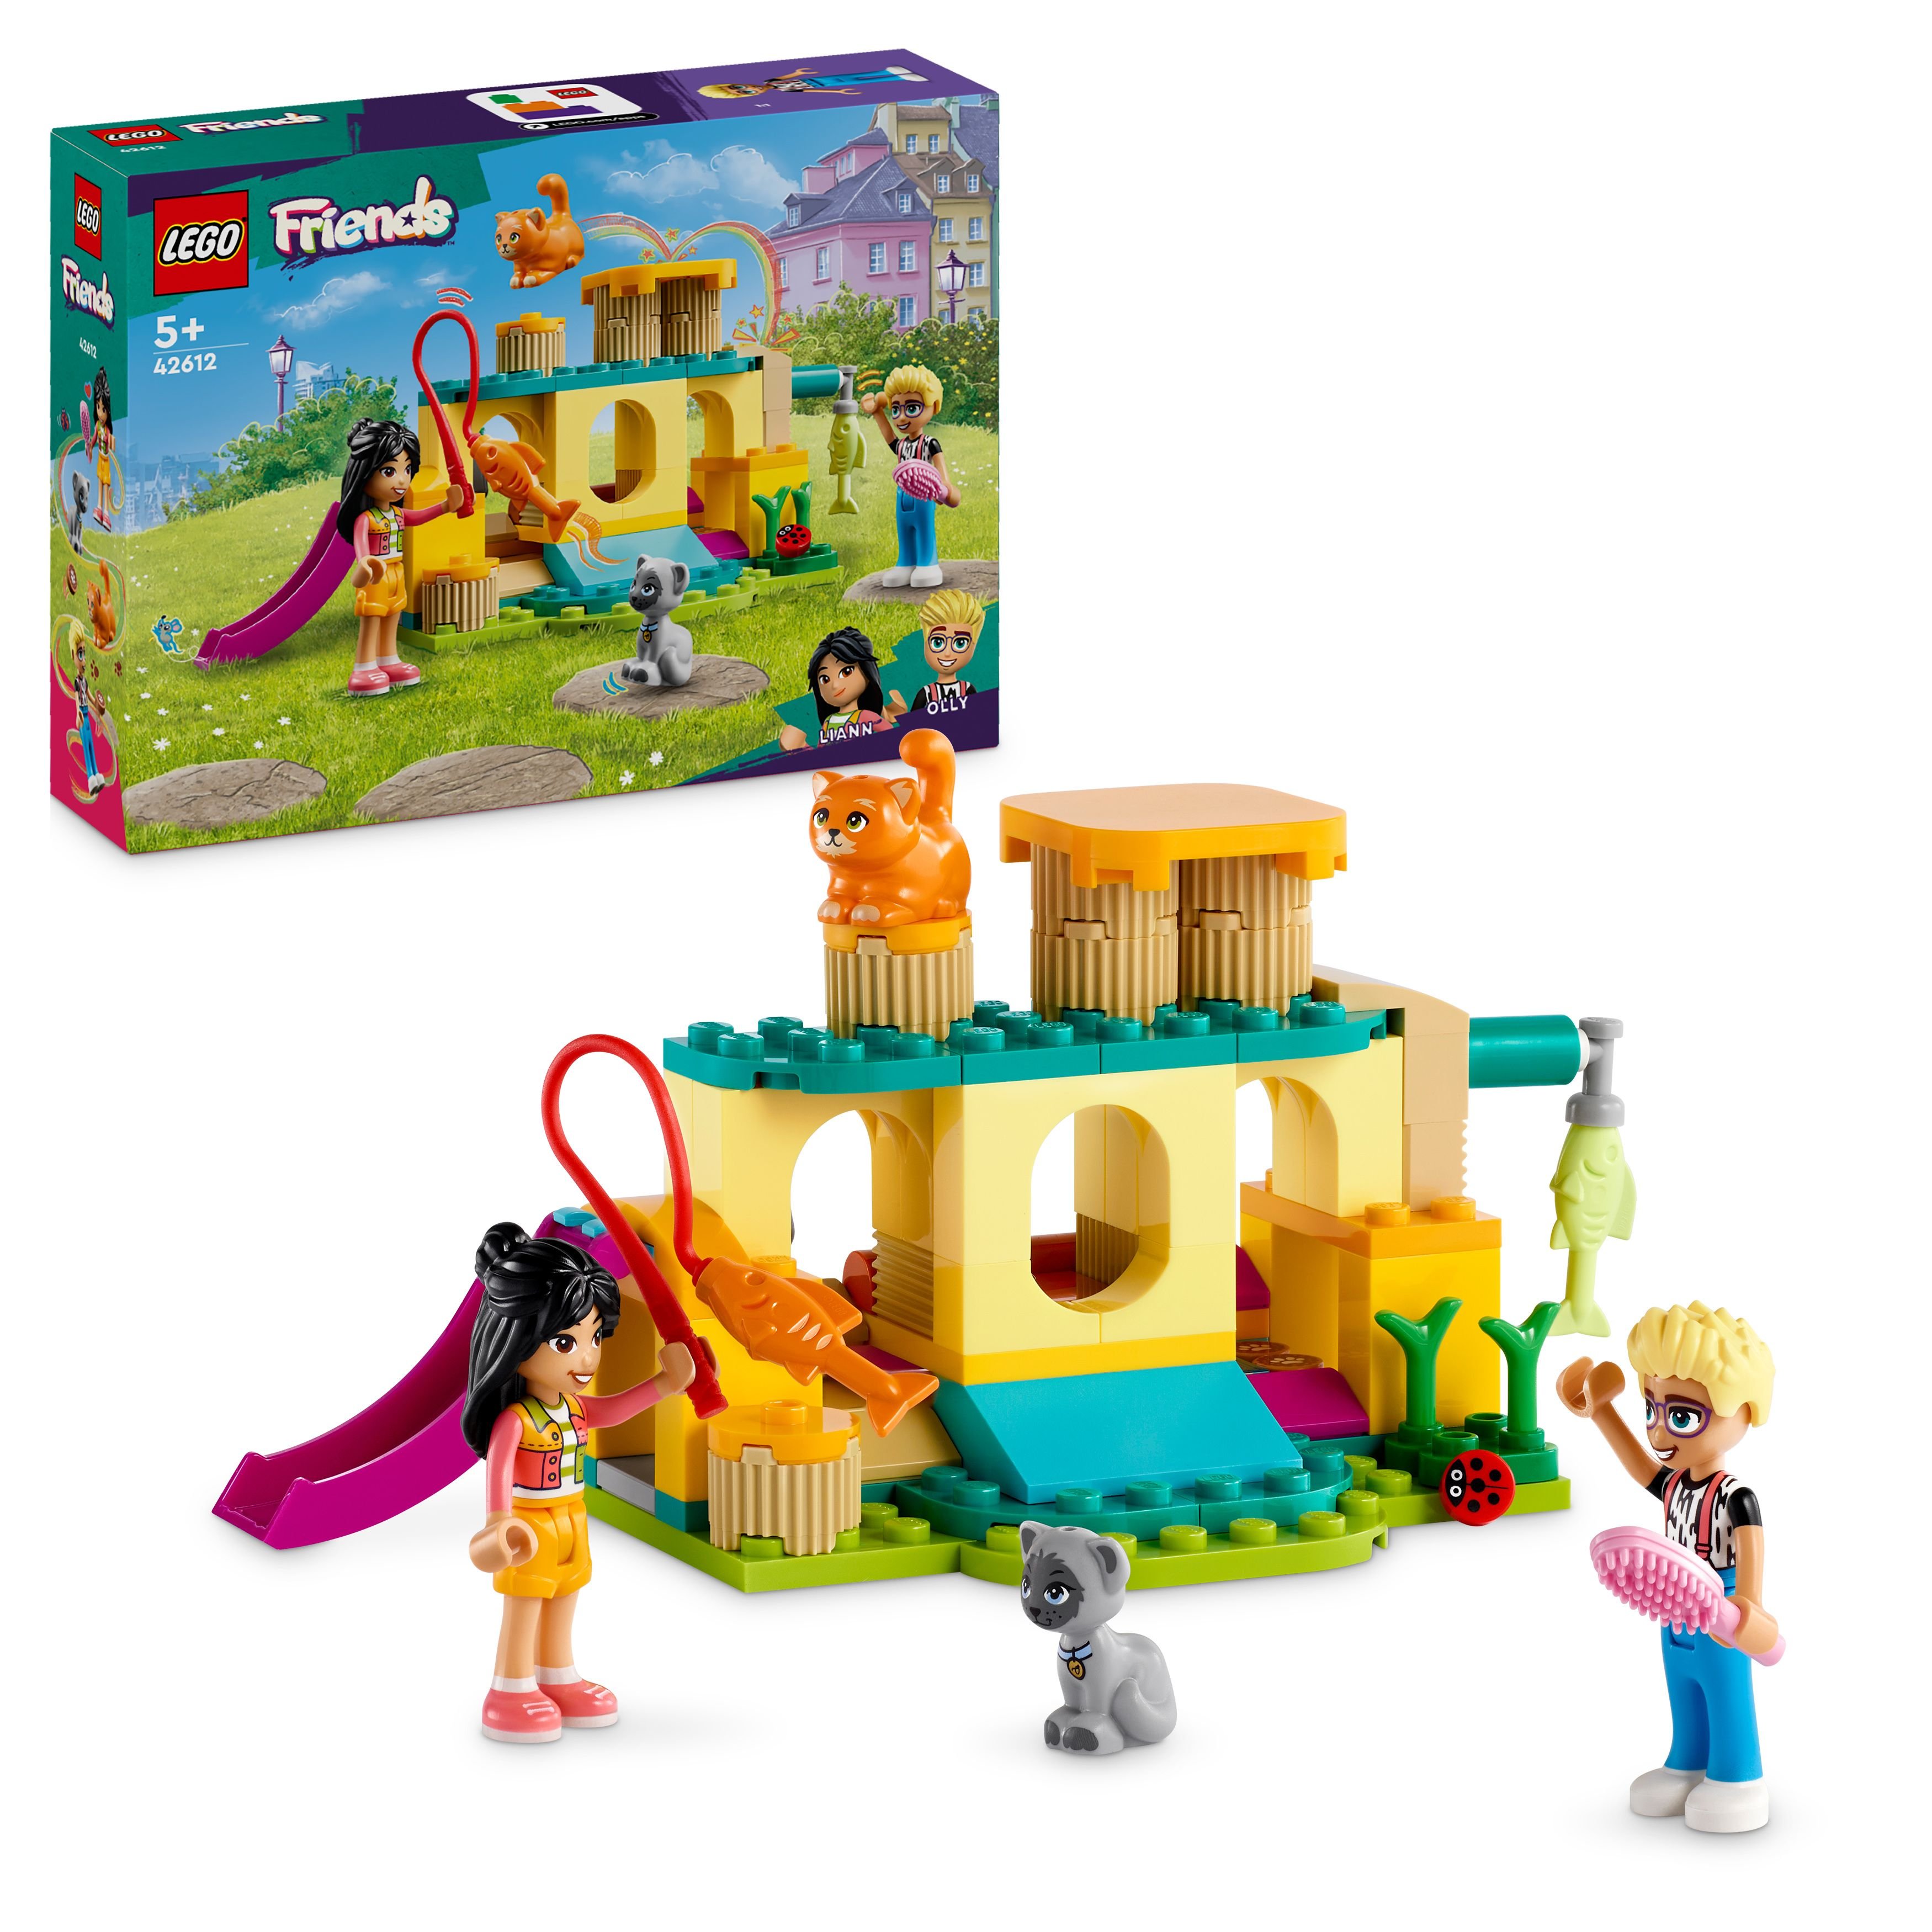 Lego Cat Playground Adventure (42612) Toys & Games